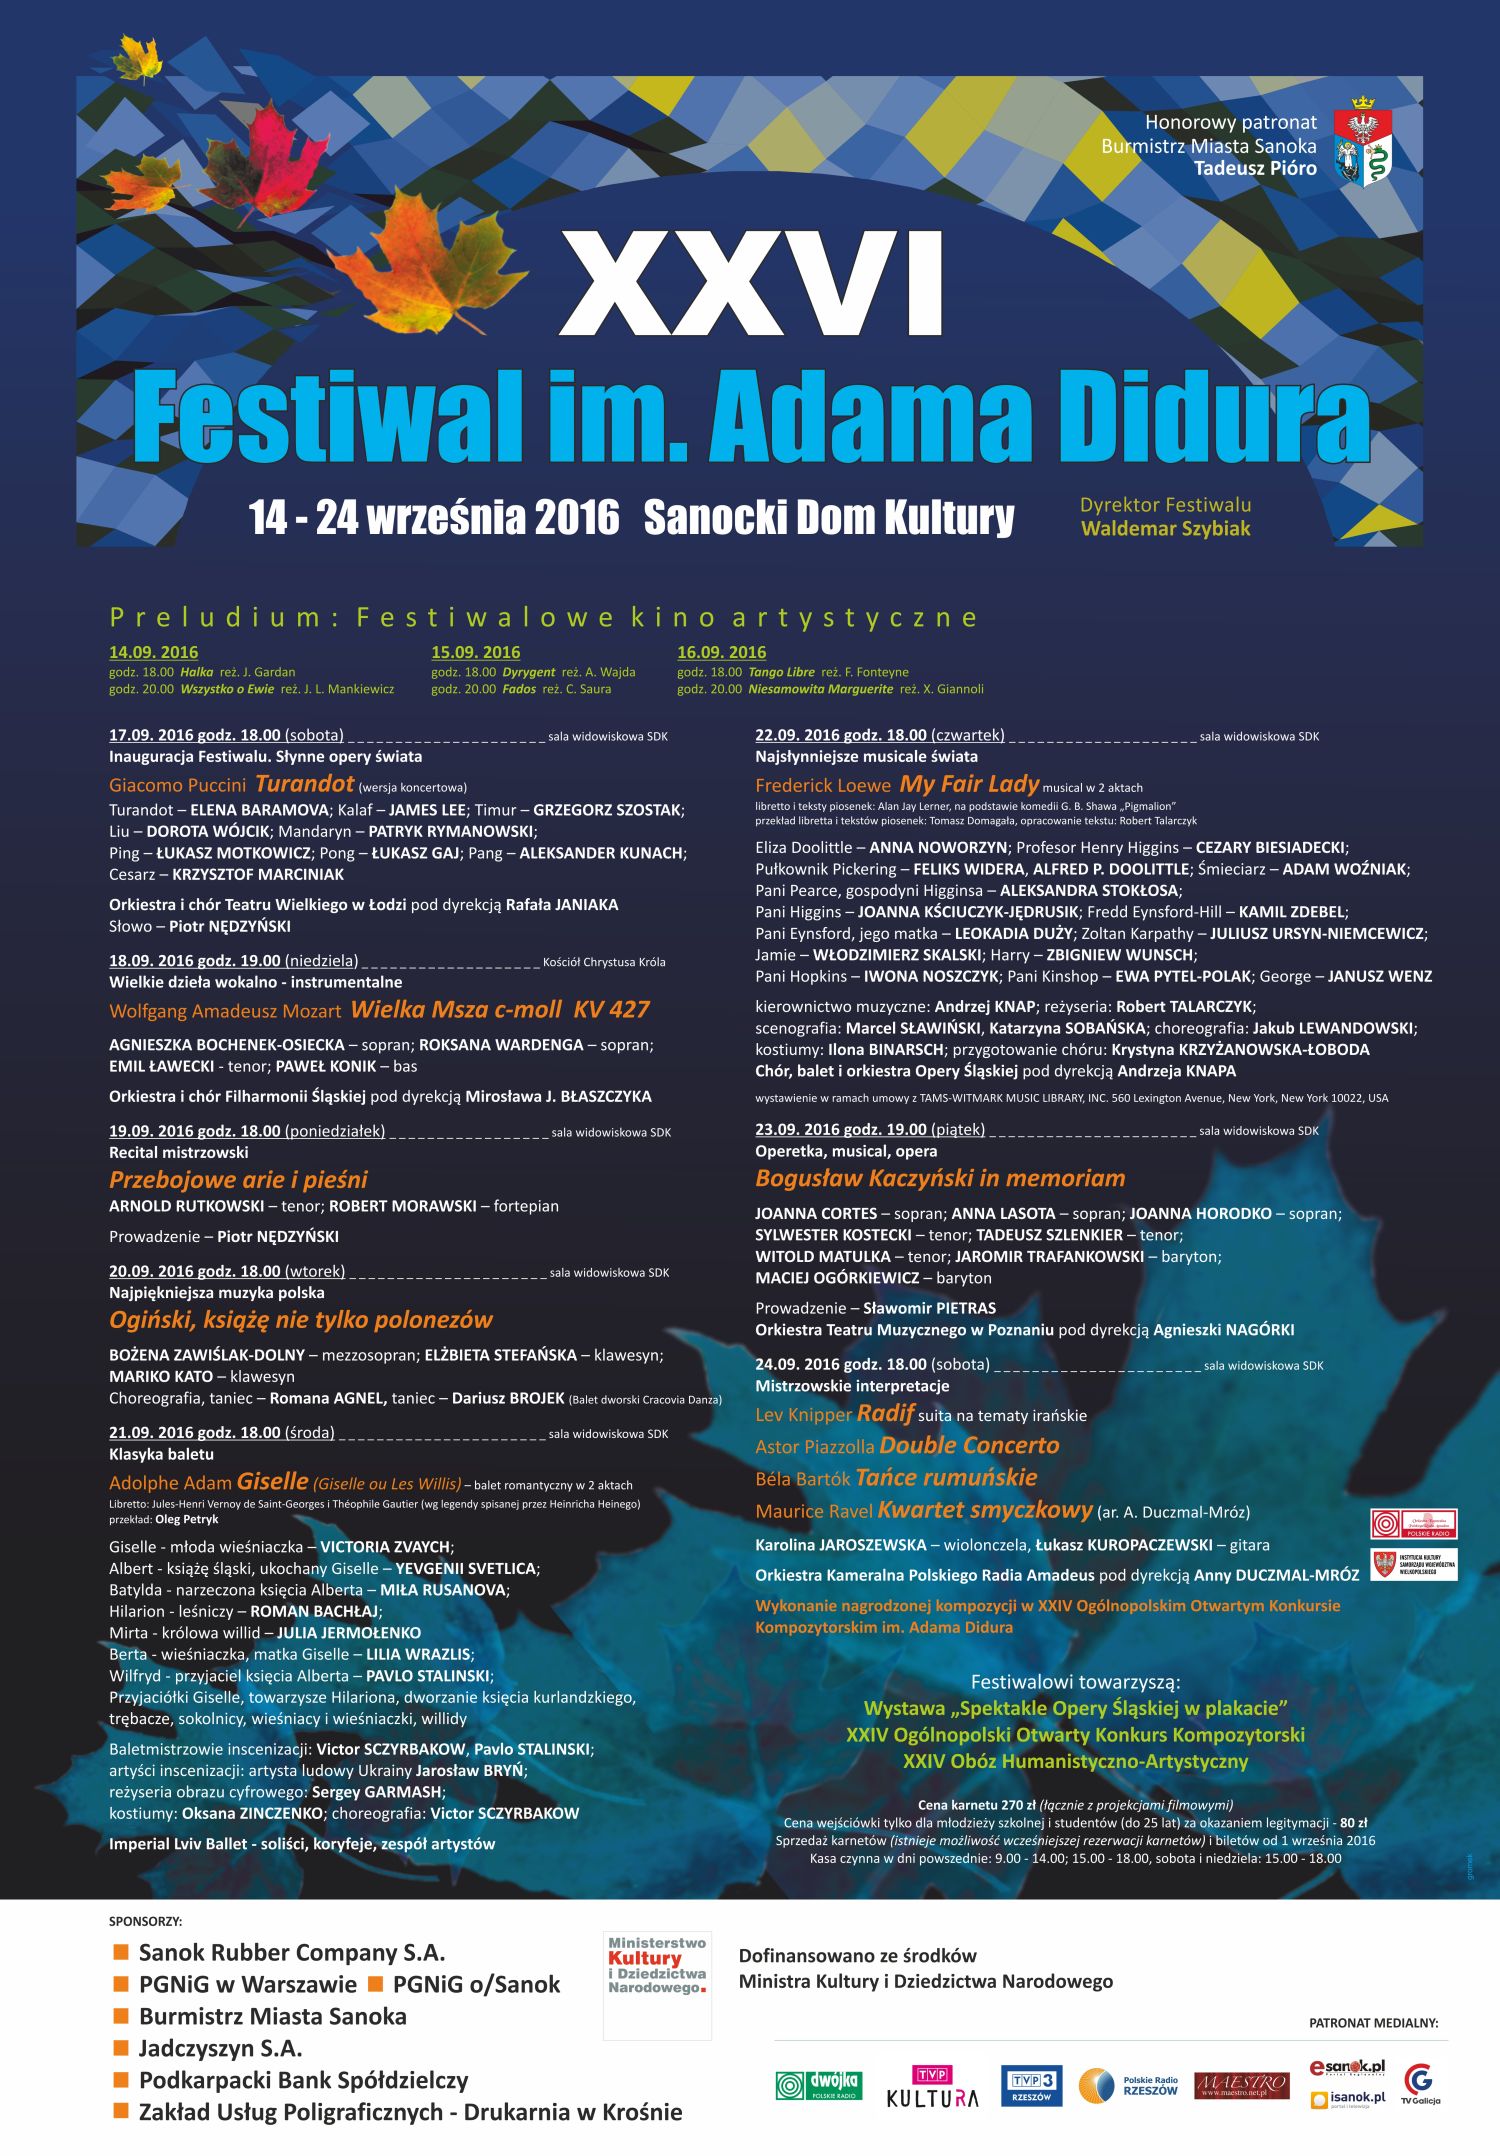 PLAKAT 26 Festiwal im. Adama Didura